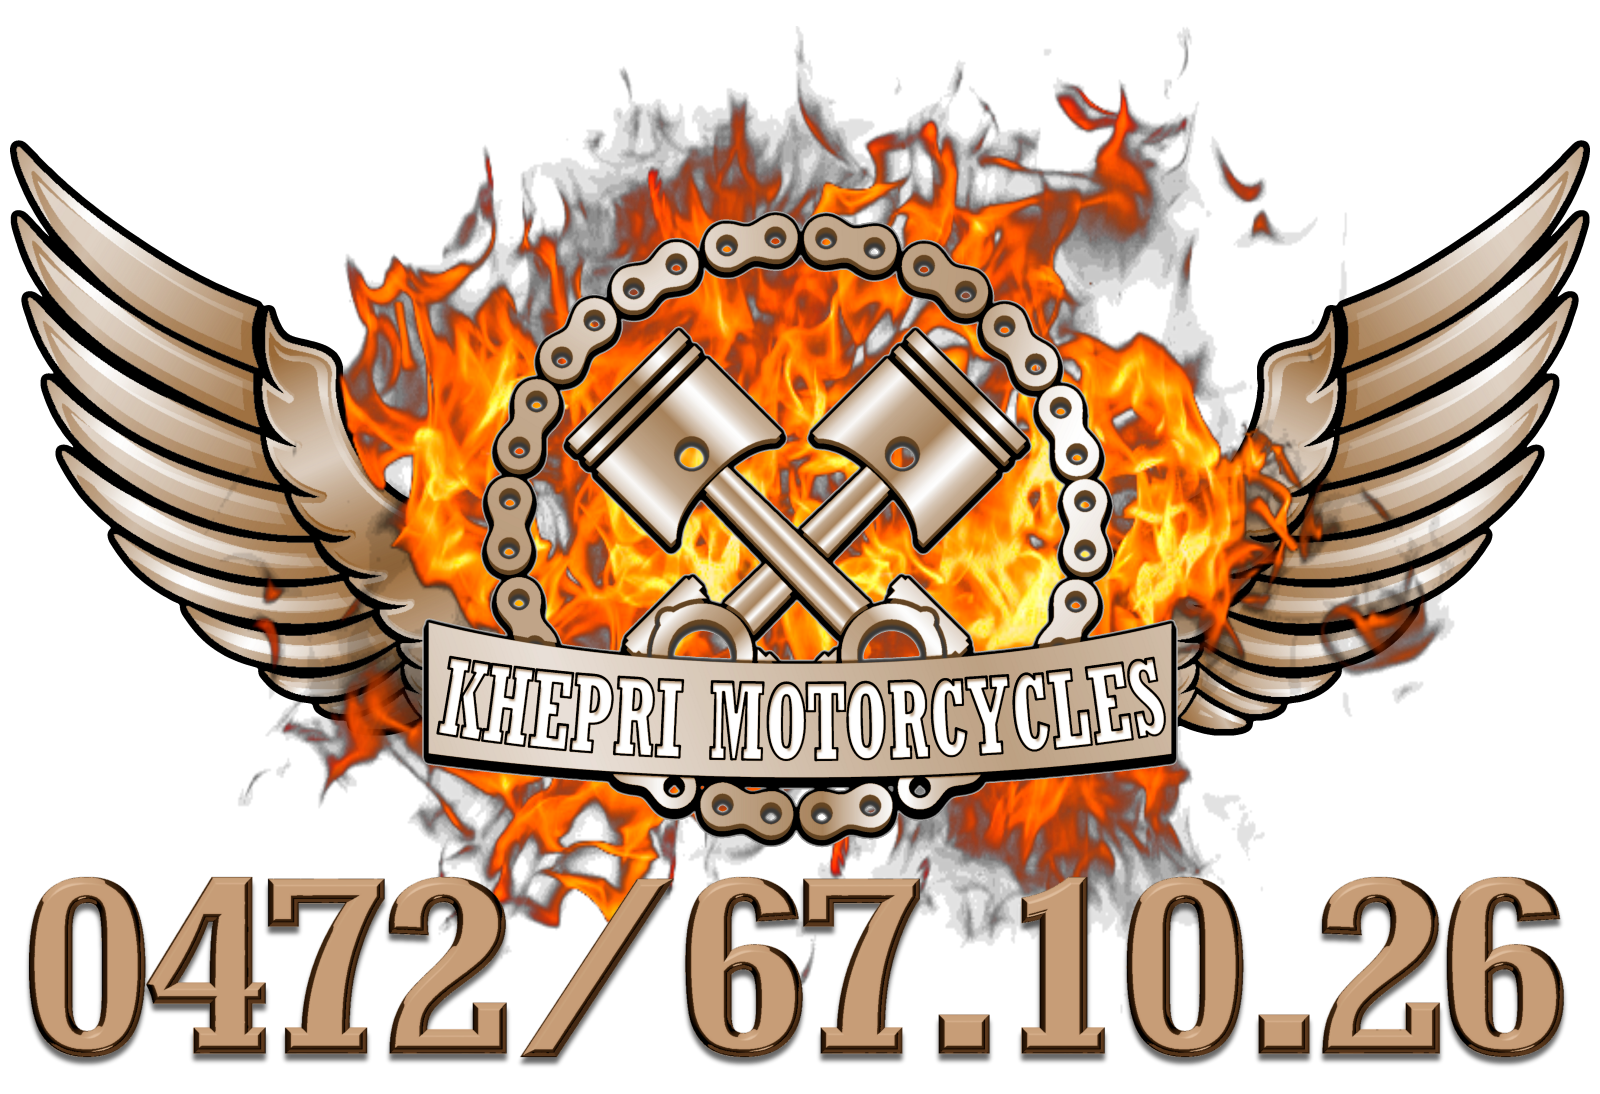 Khepri Motorcycles